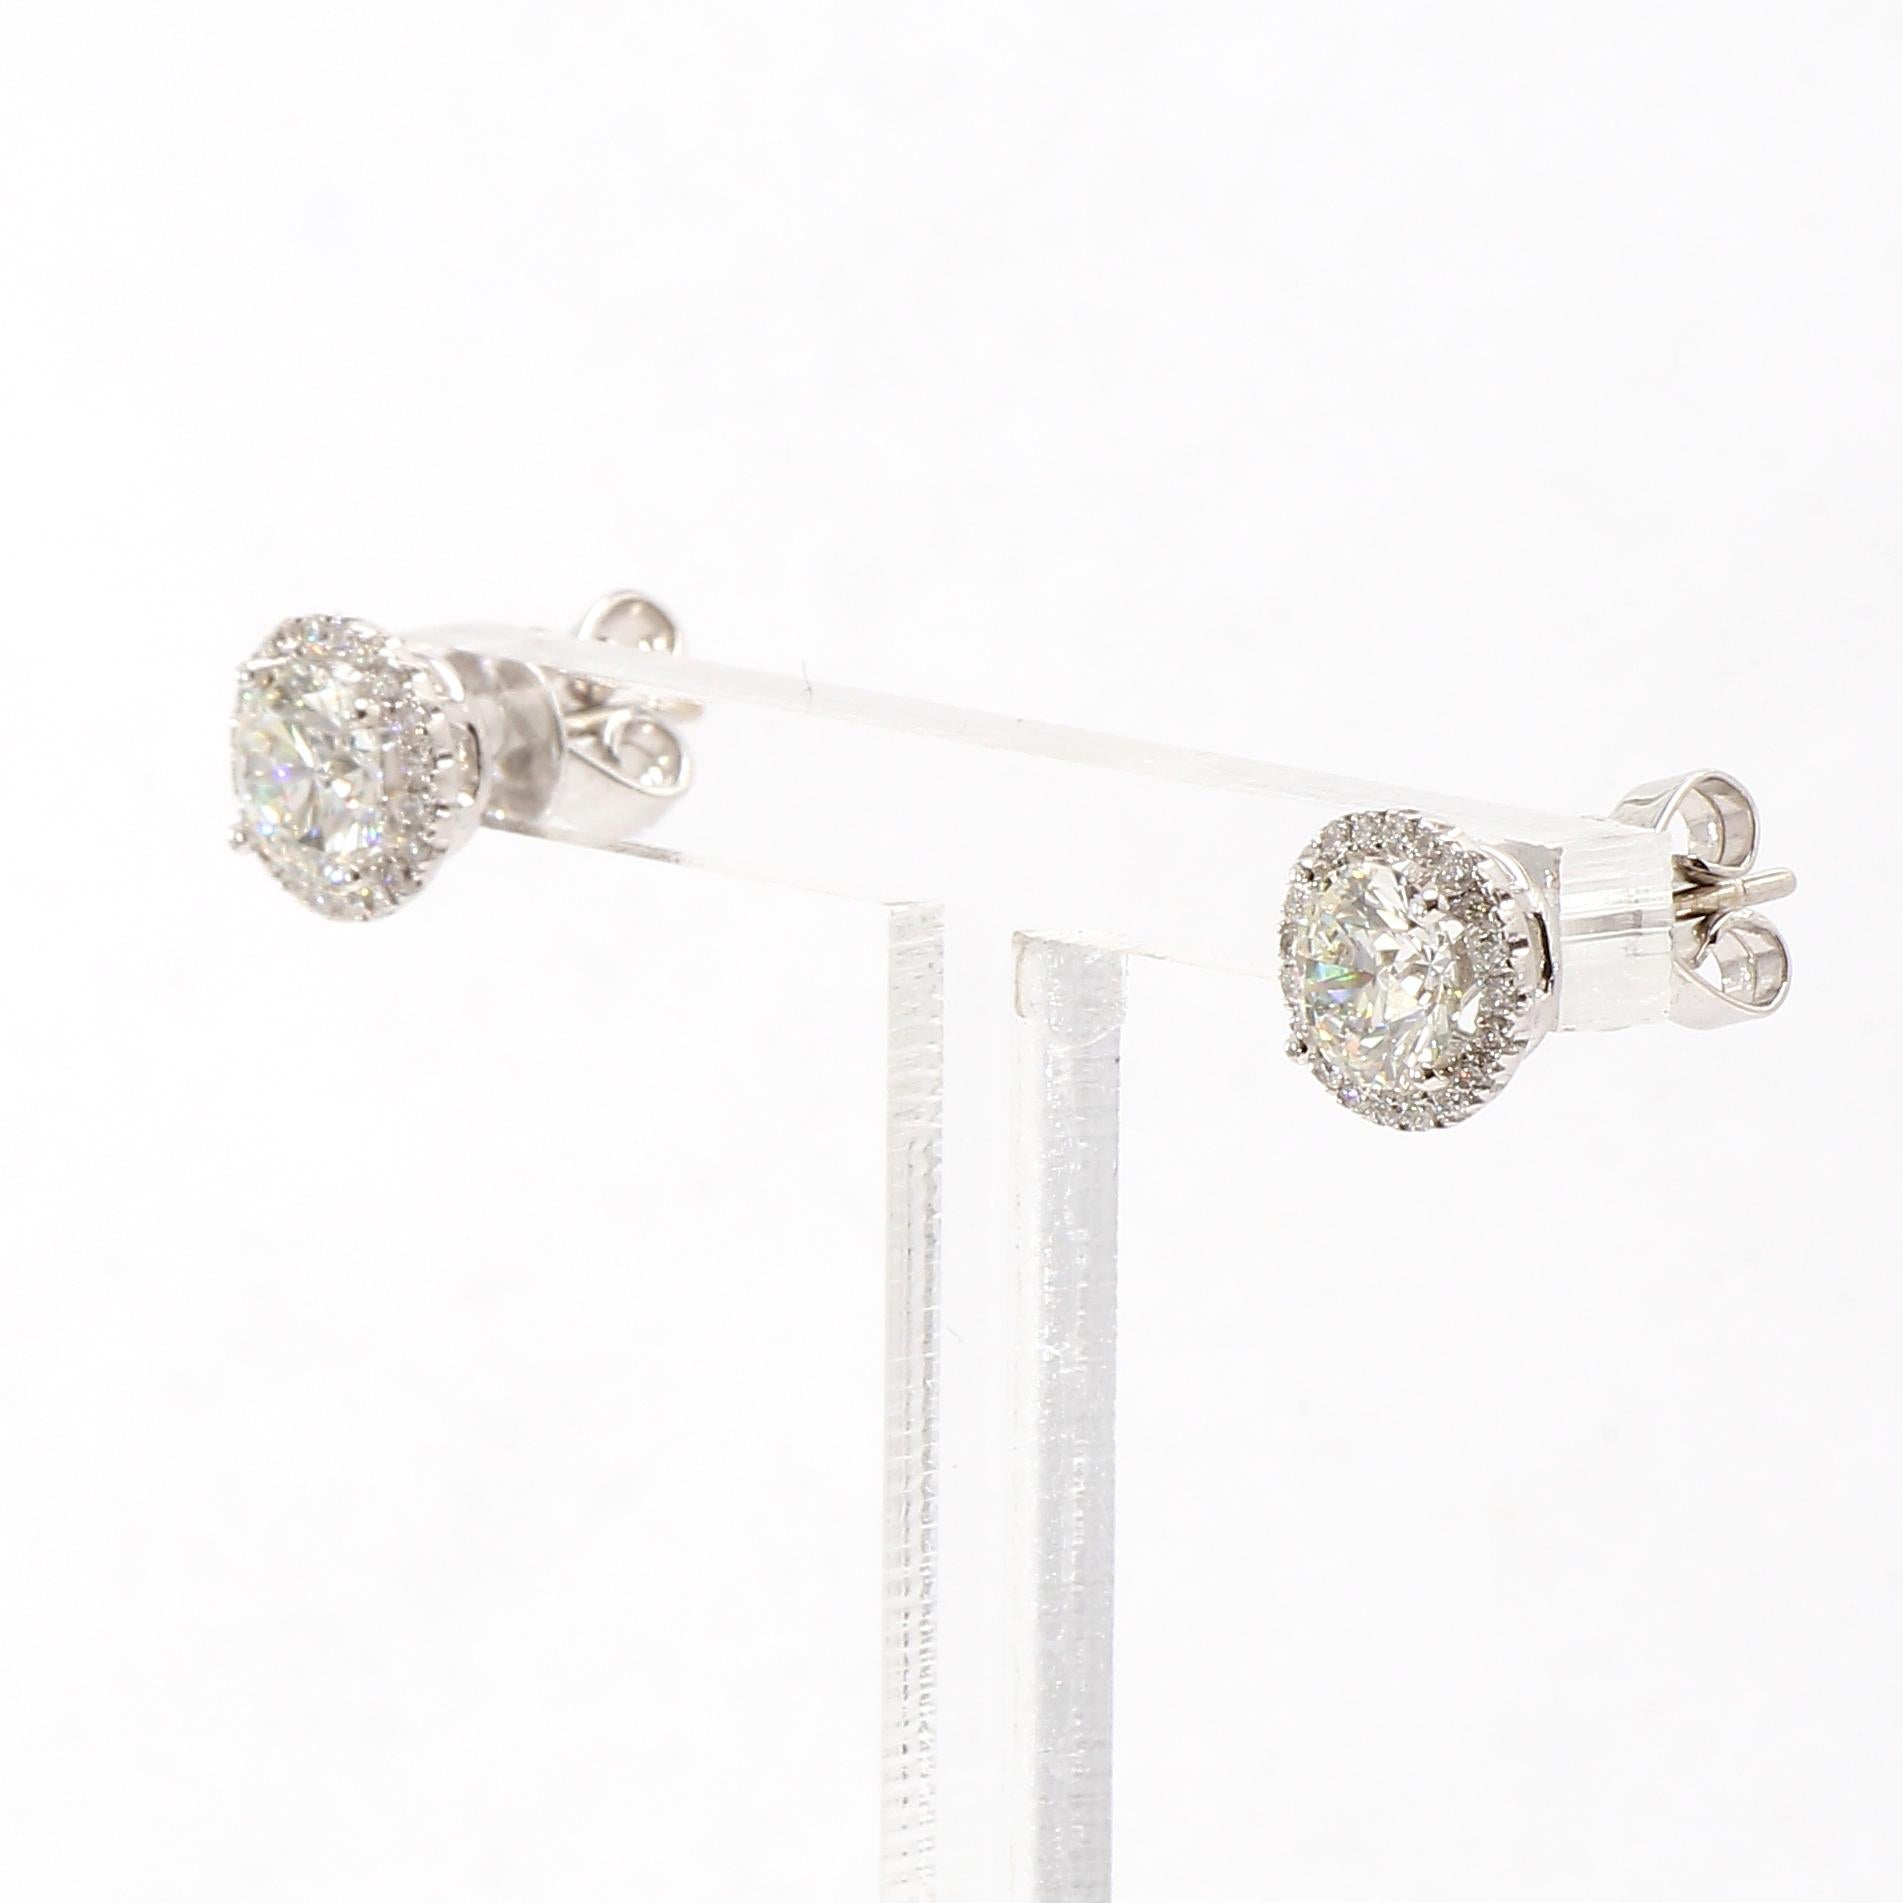 Contemporary Halo Design Diamonds Studs Earrings in 18K White Gold Diamonds. For Sale